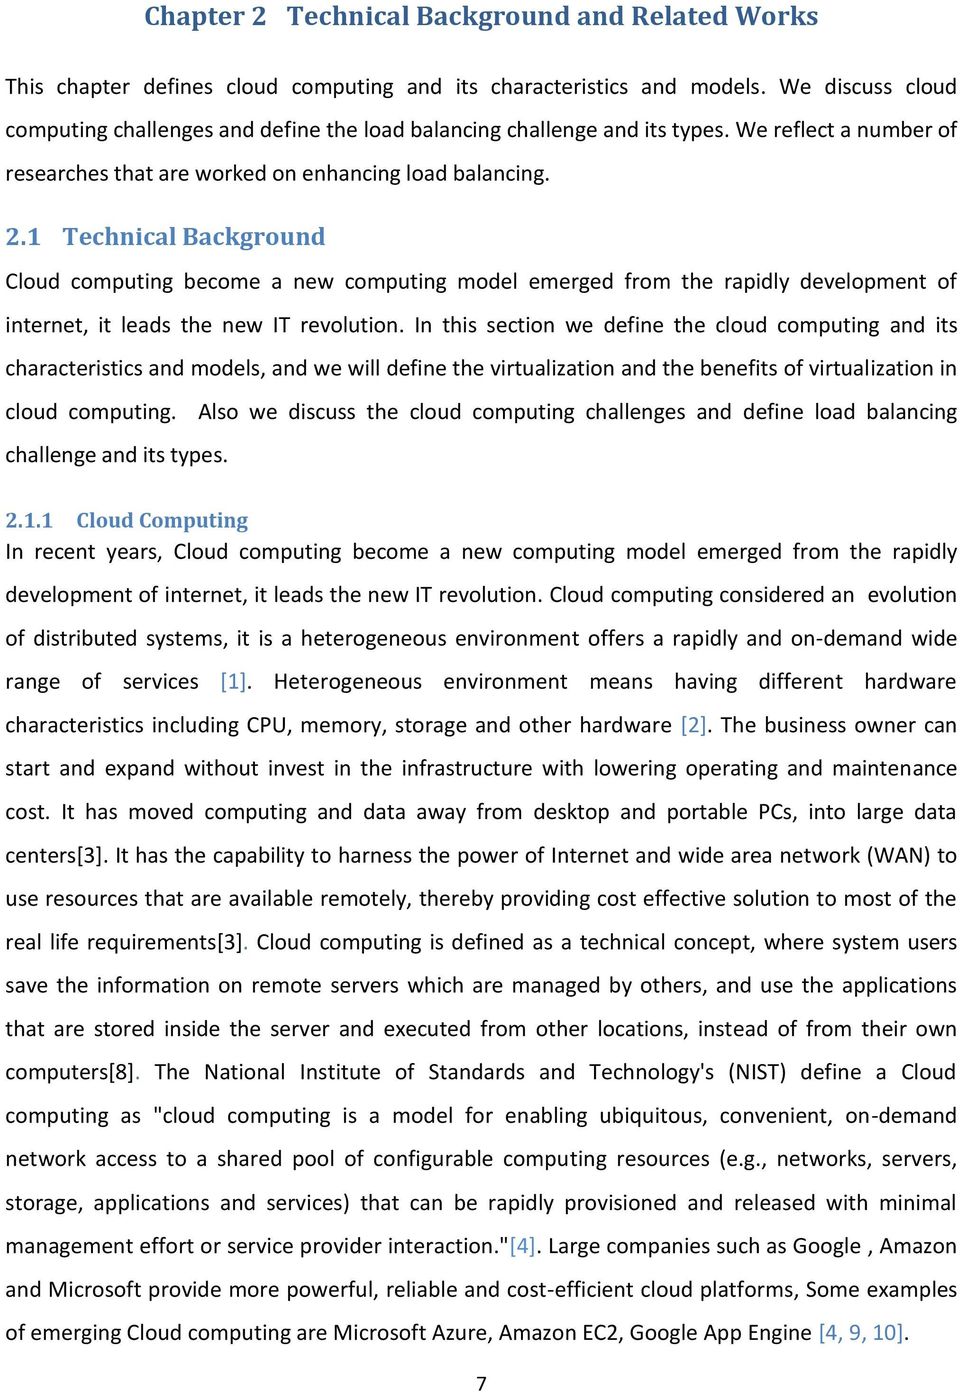 phd thesis on load balancing in cloud computing